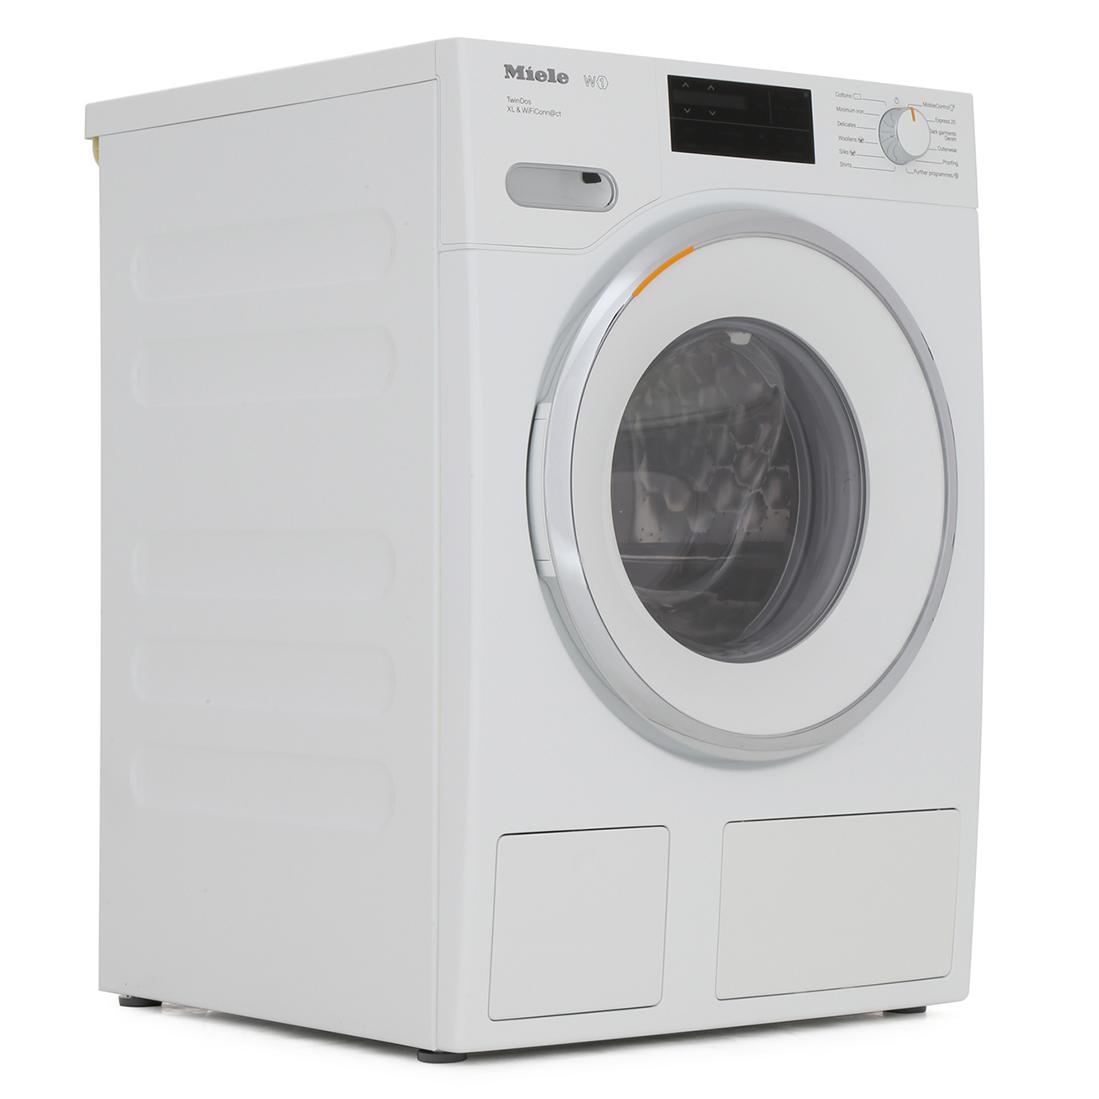 Miele W1 Washing Machine User Manual